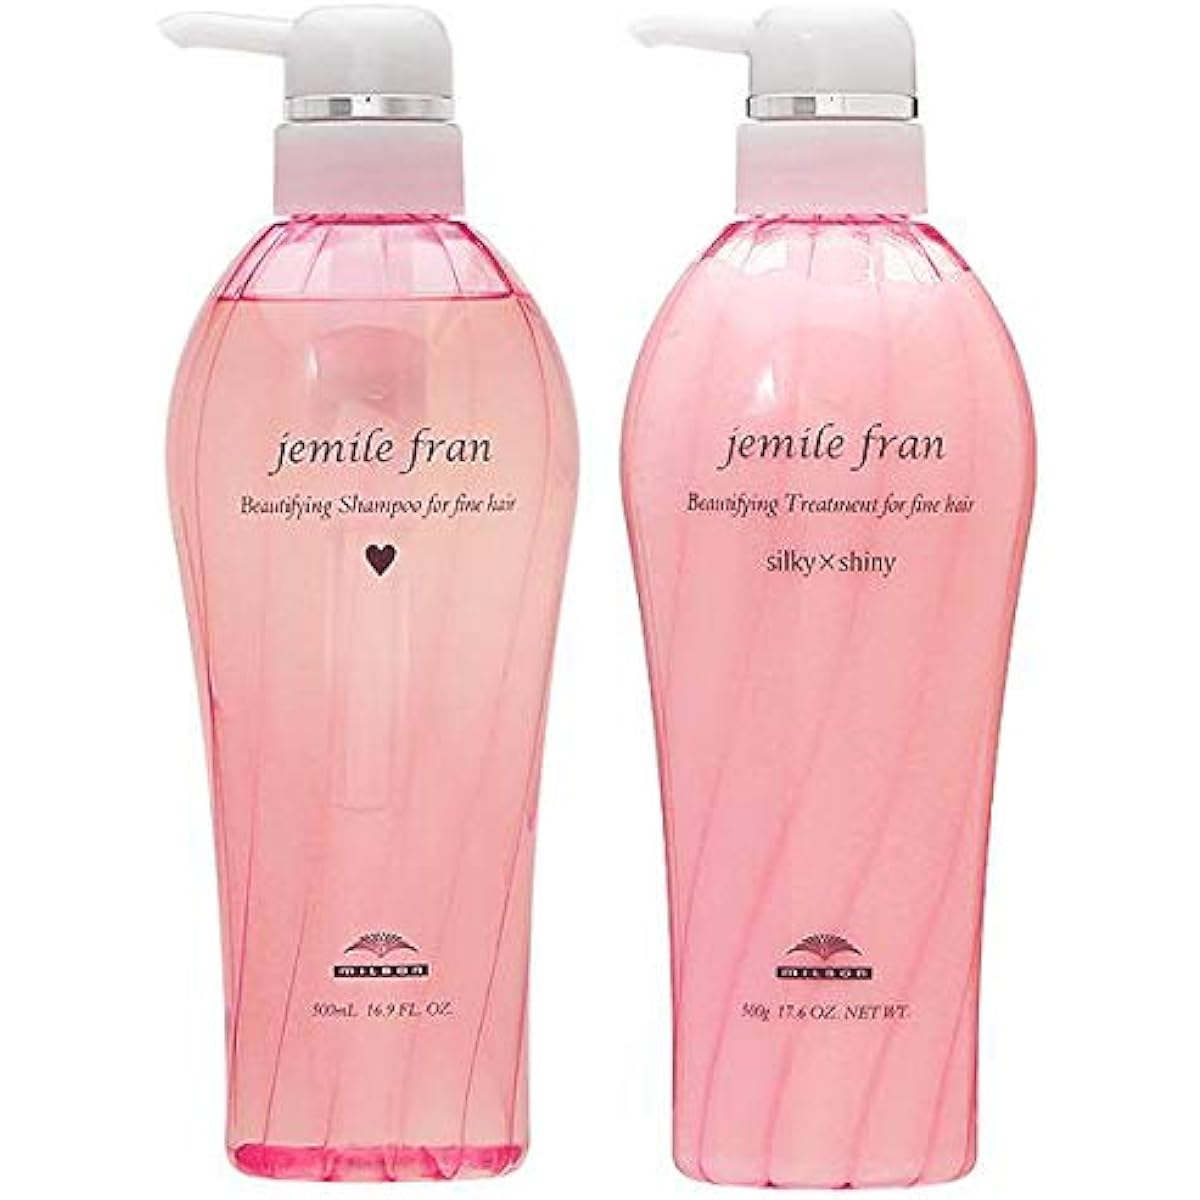 [Set] MILBON Gemile Fran Shampoo Heart + Treatment Silky Shiny 500mL each bottle set